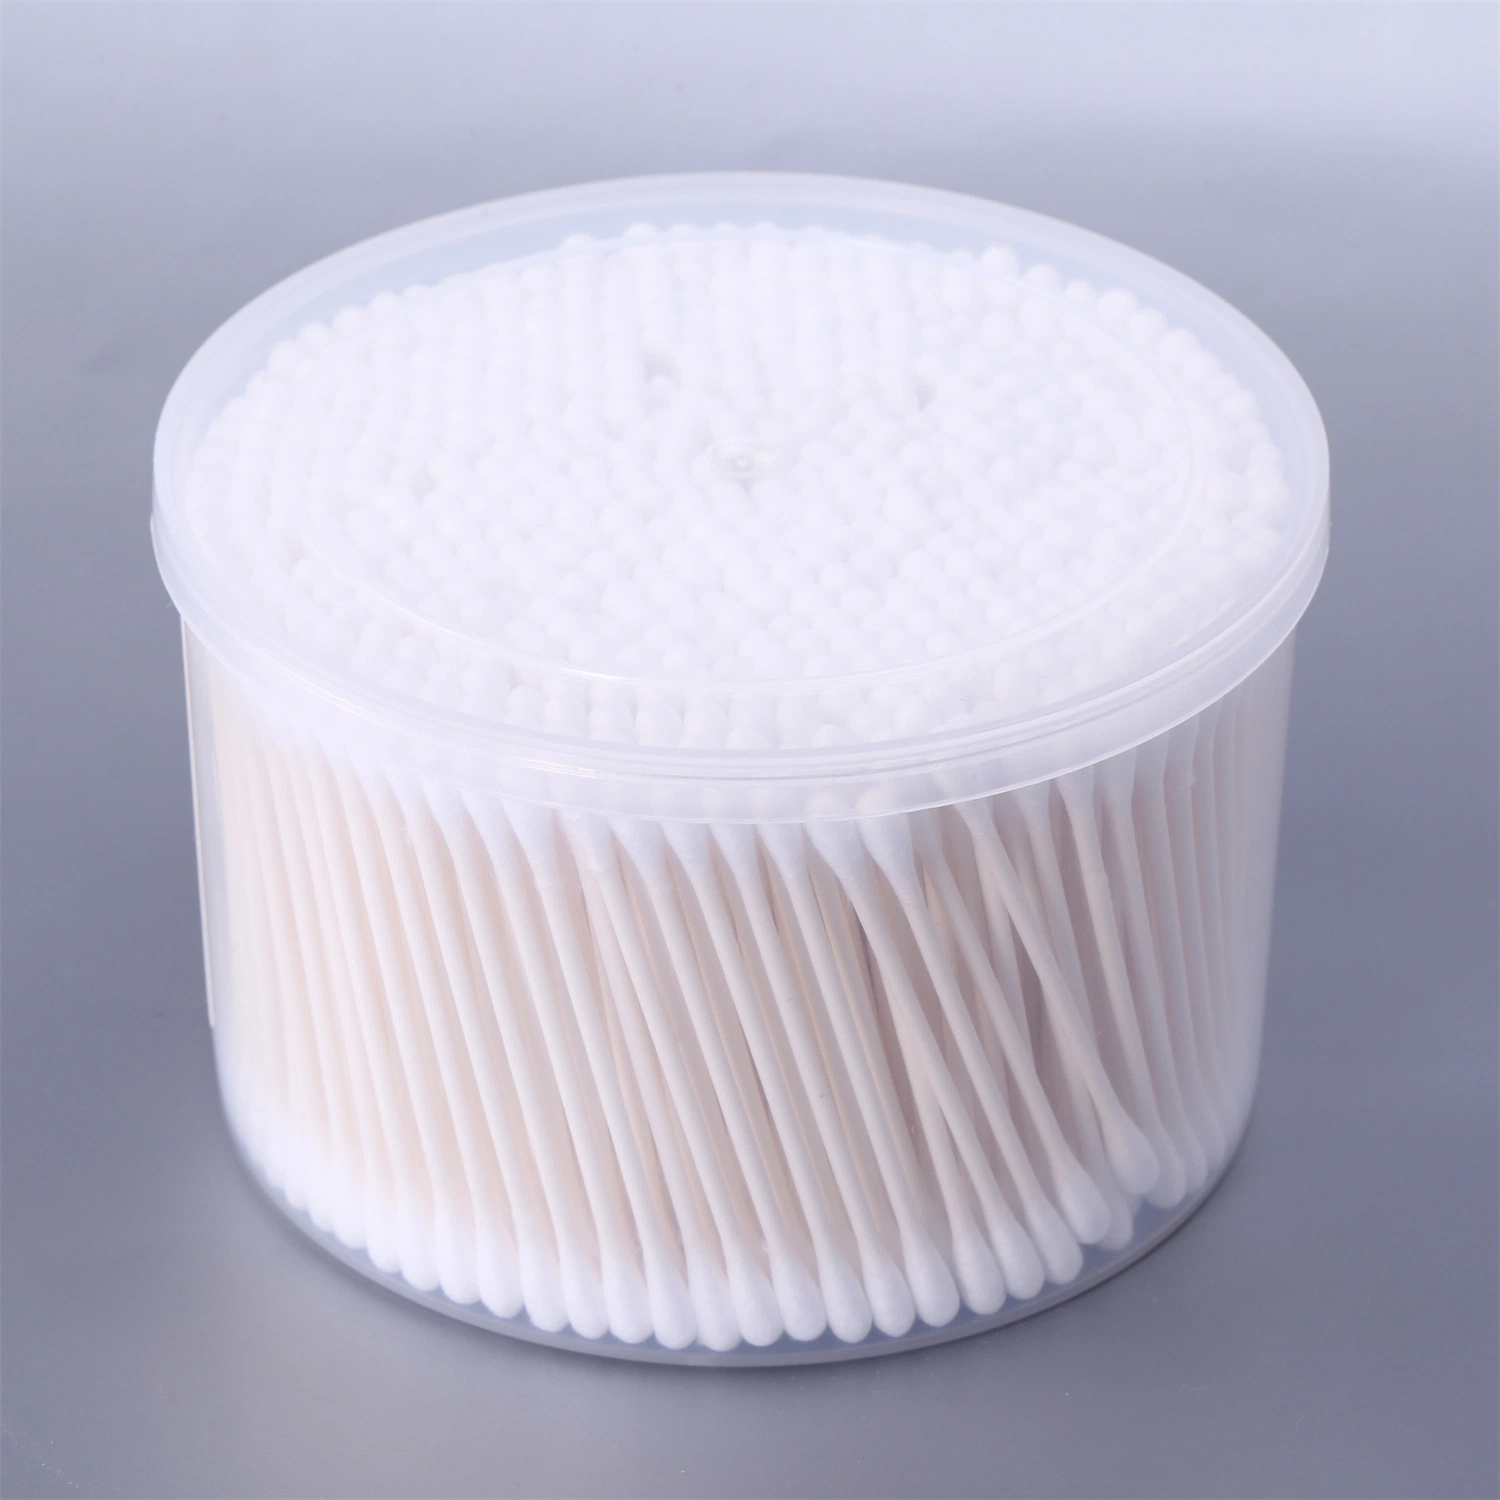 100% Cotton Daily Use Disposable Cotton Swab Manufacturer